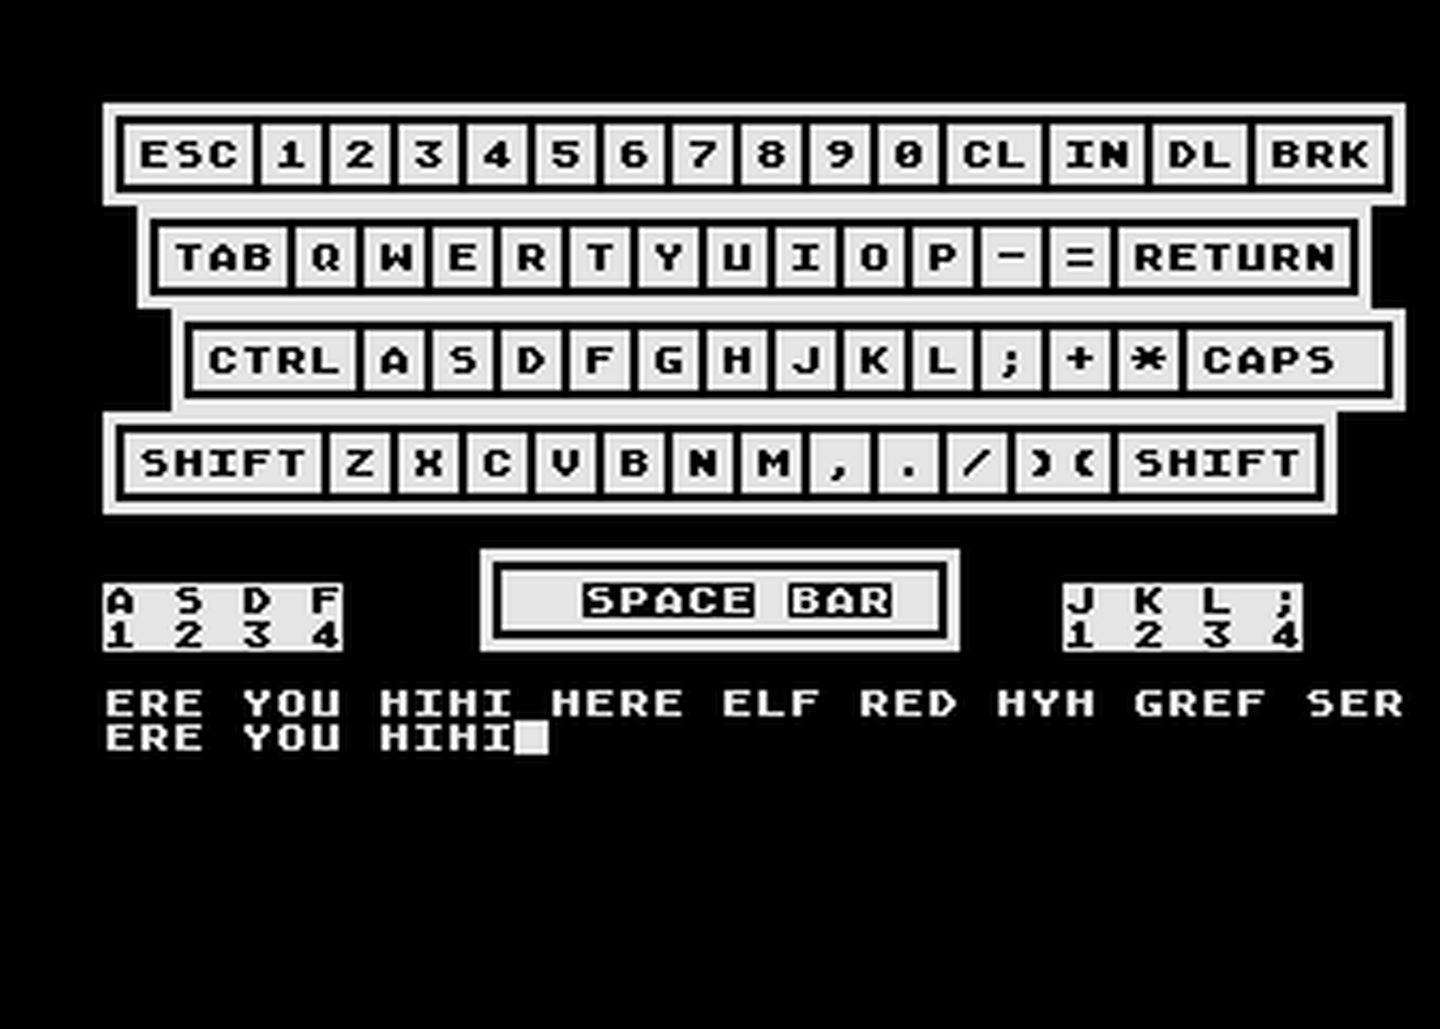 Atari GameBase Keyboard_Coach K-Tek_Software 1983